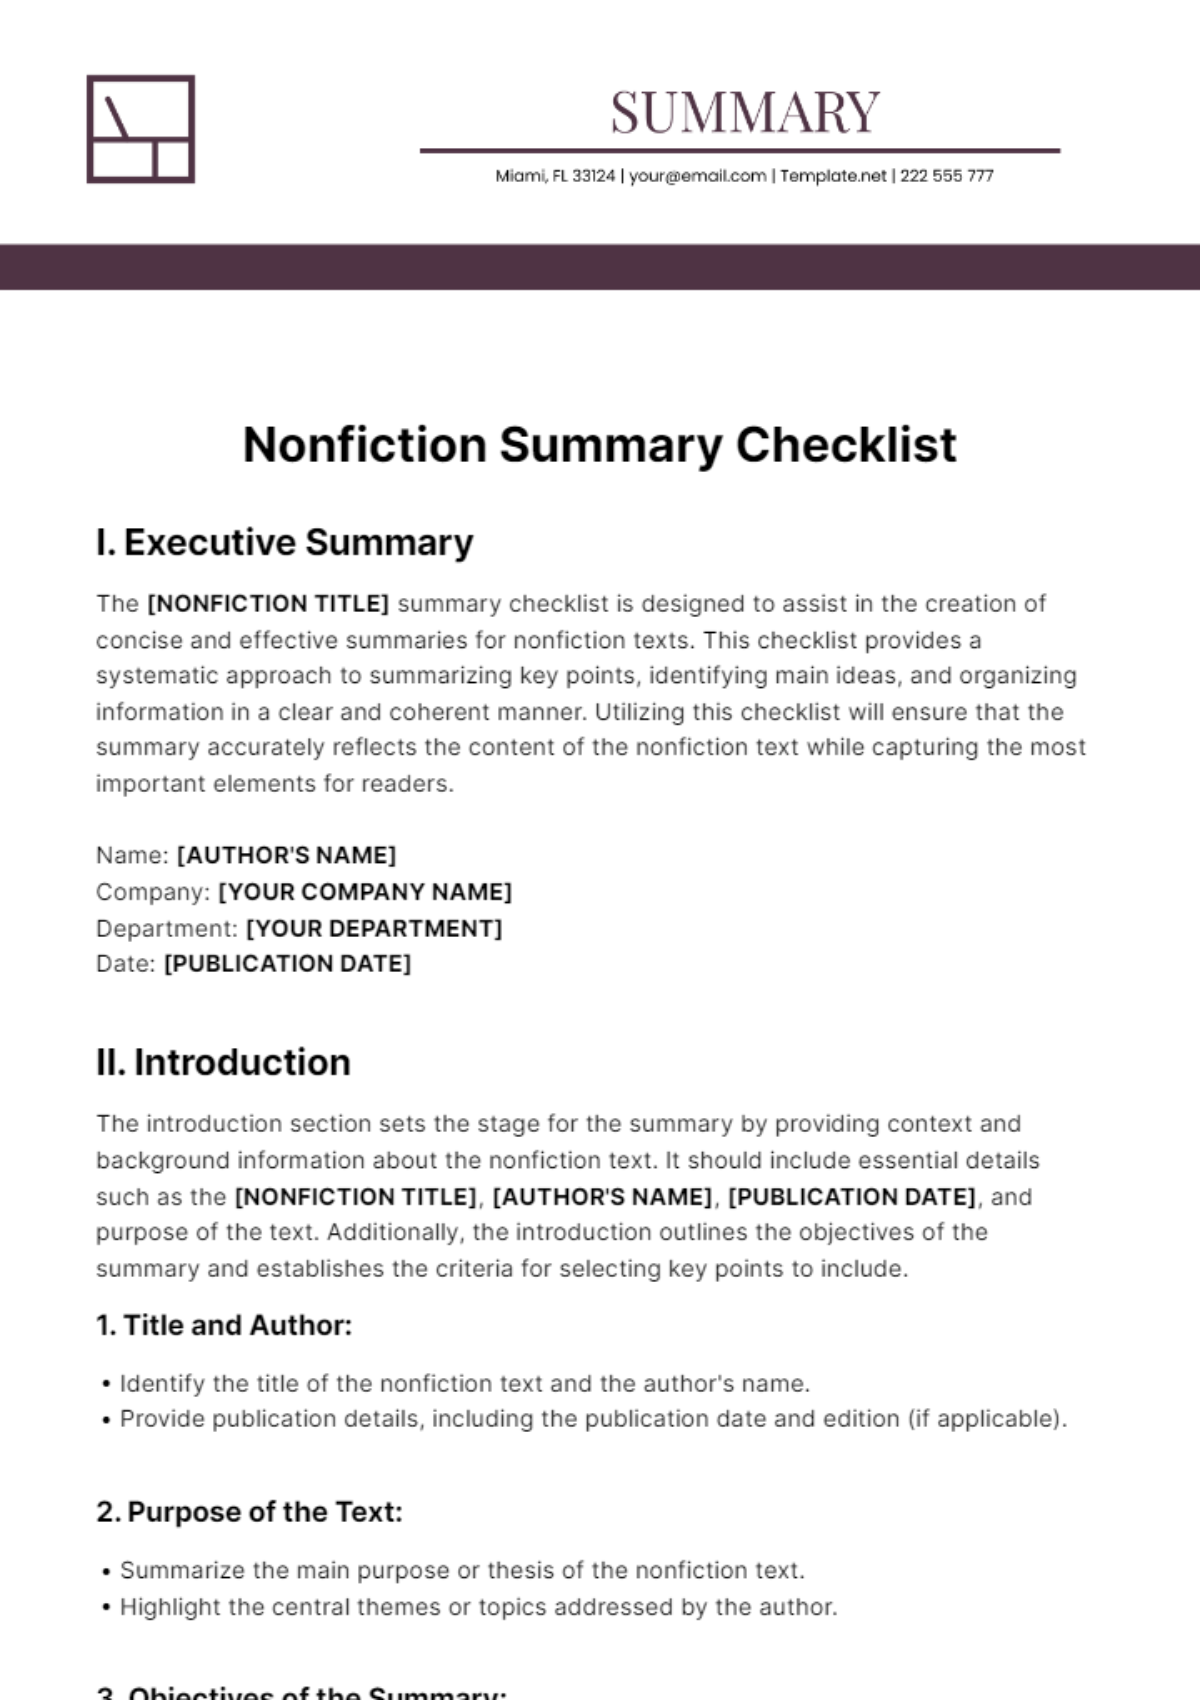 Nonfiction Summary Checklist Template